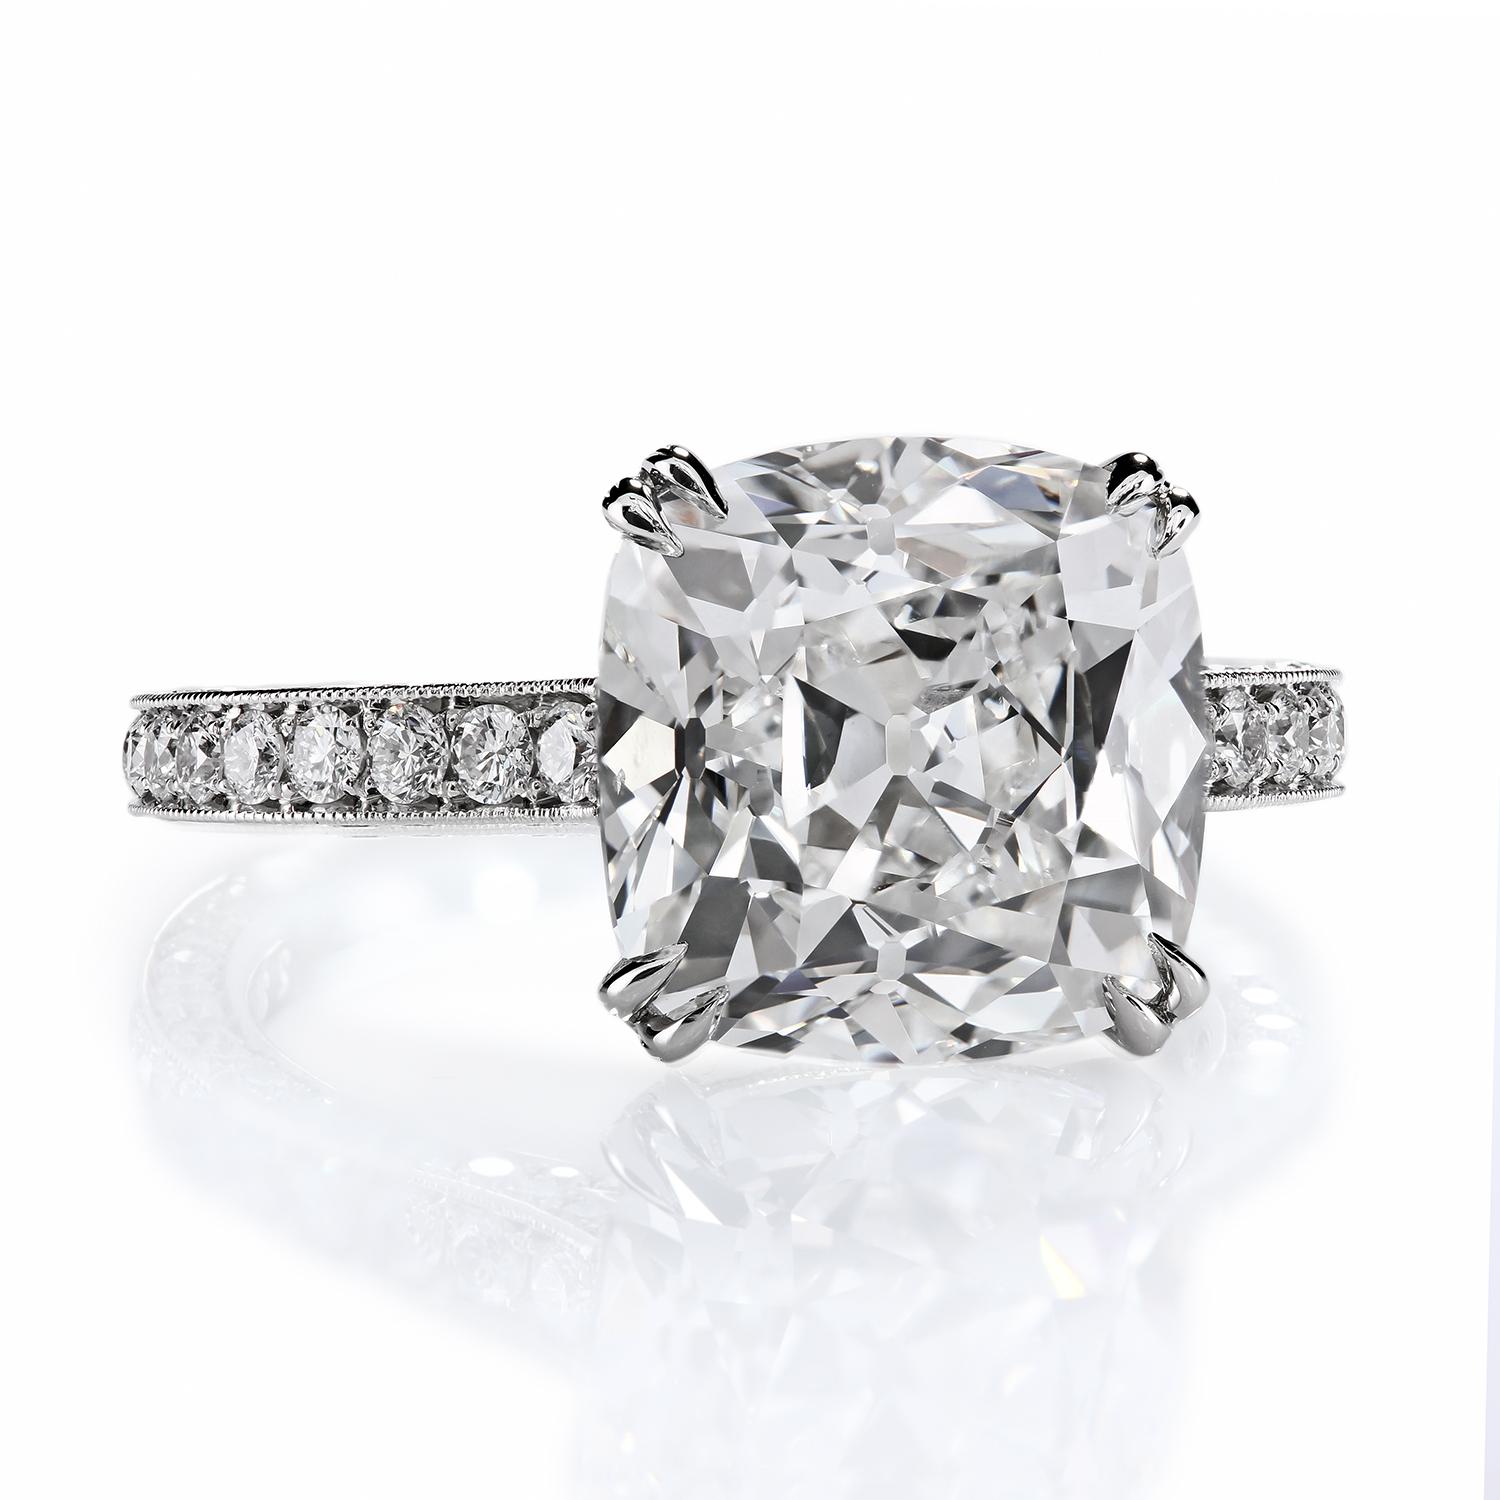 Leon Mege GIA Certified 6.02 Carat E/VS2 Antique Cushion Diamond Engagement Ring